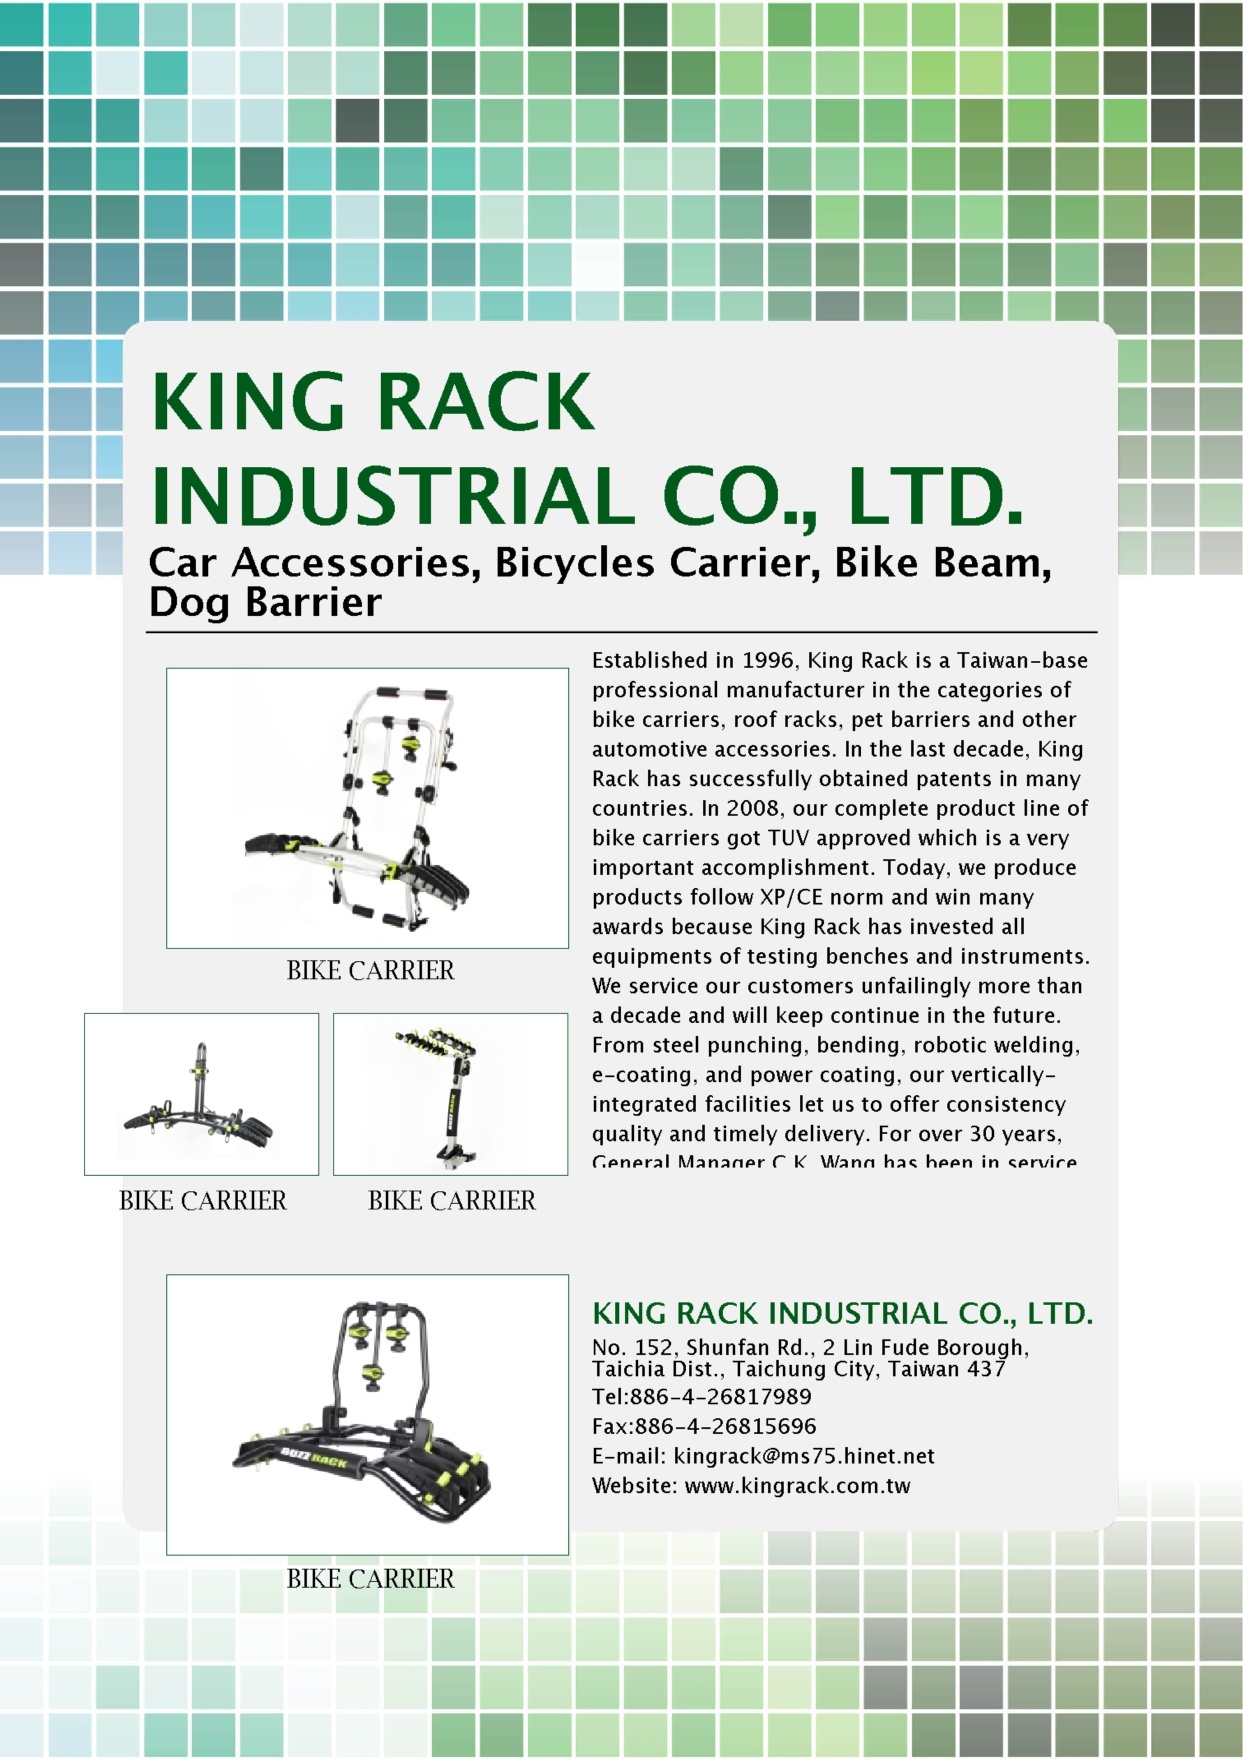 KING RACK INDUSTRIAL CO., LTD.